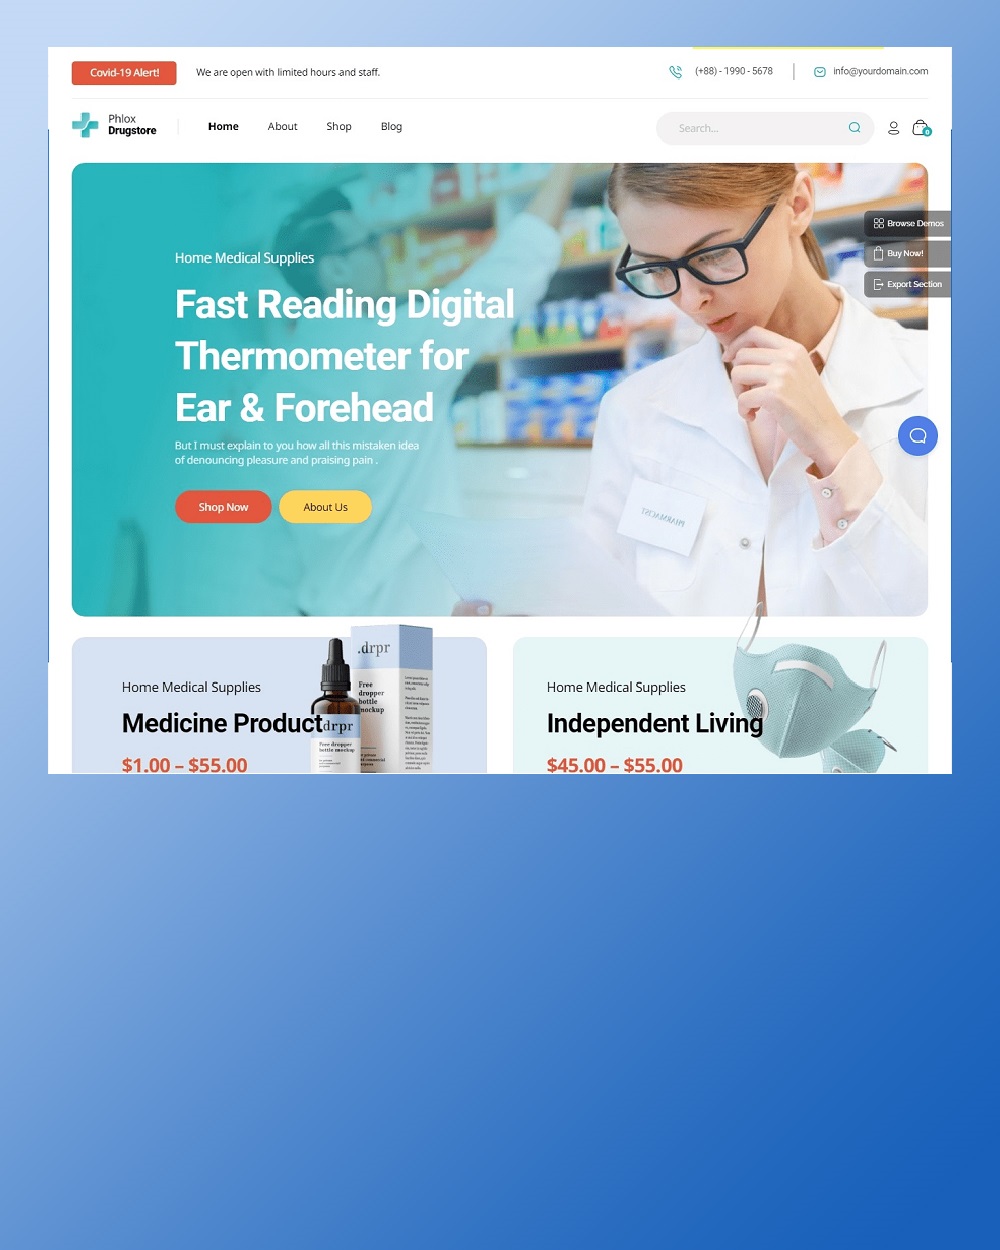 phlox pharmacy online shop